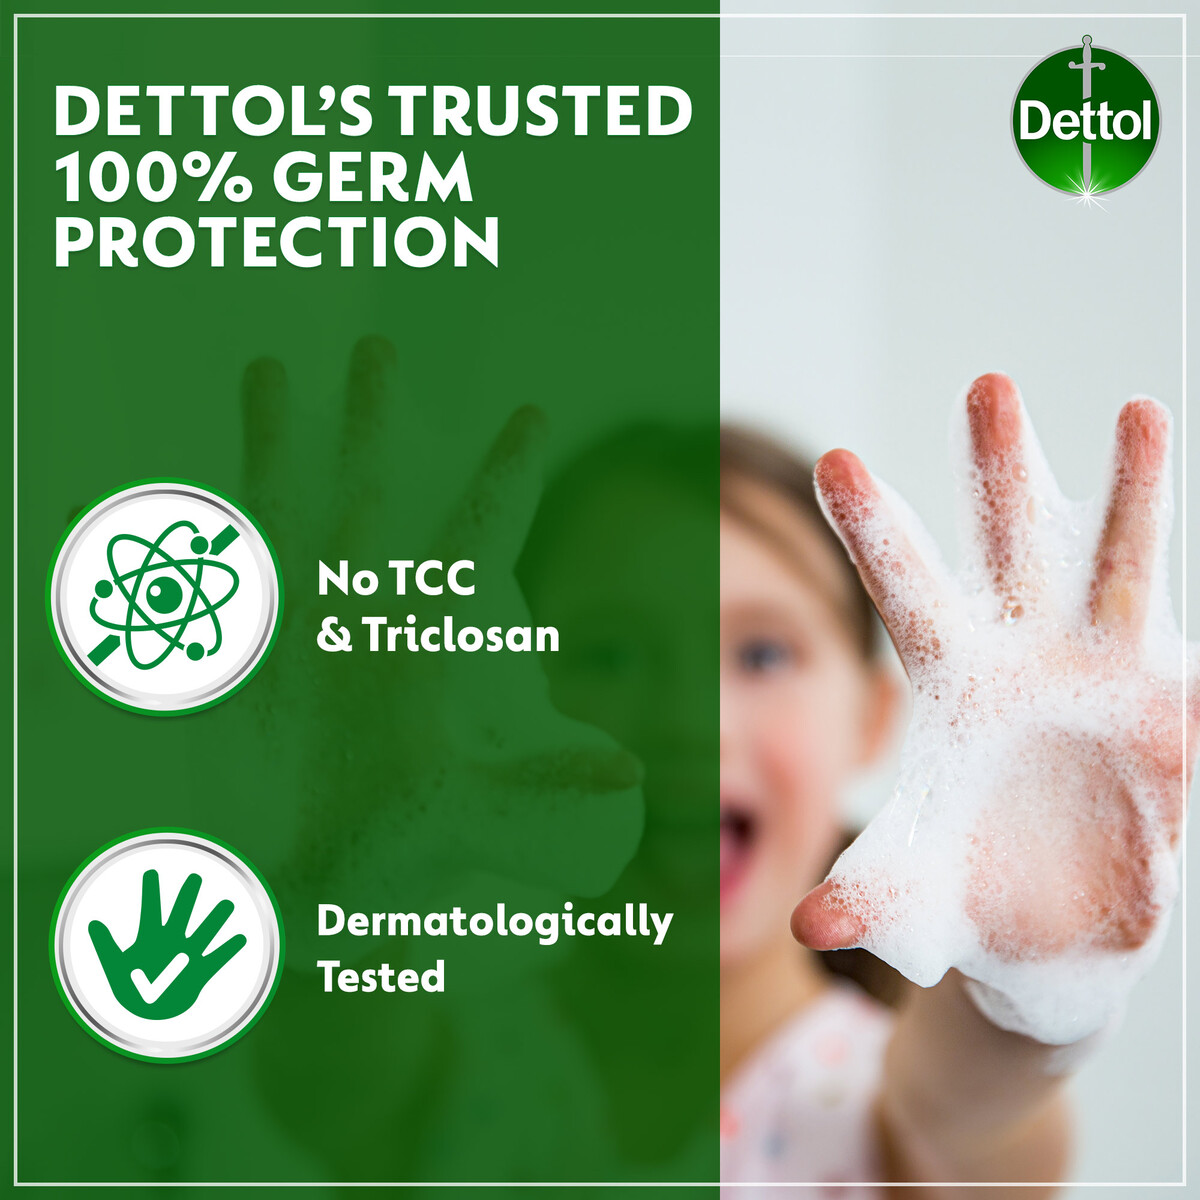 Dettol Original Anti-Bacterial Hand Wash Value Pack 2 x 200 ml